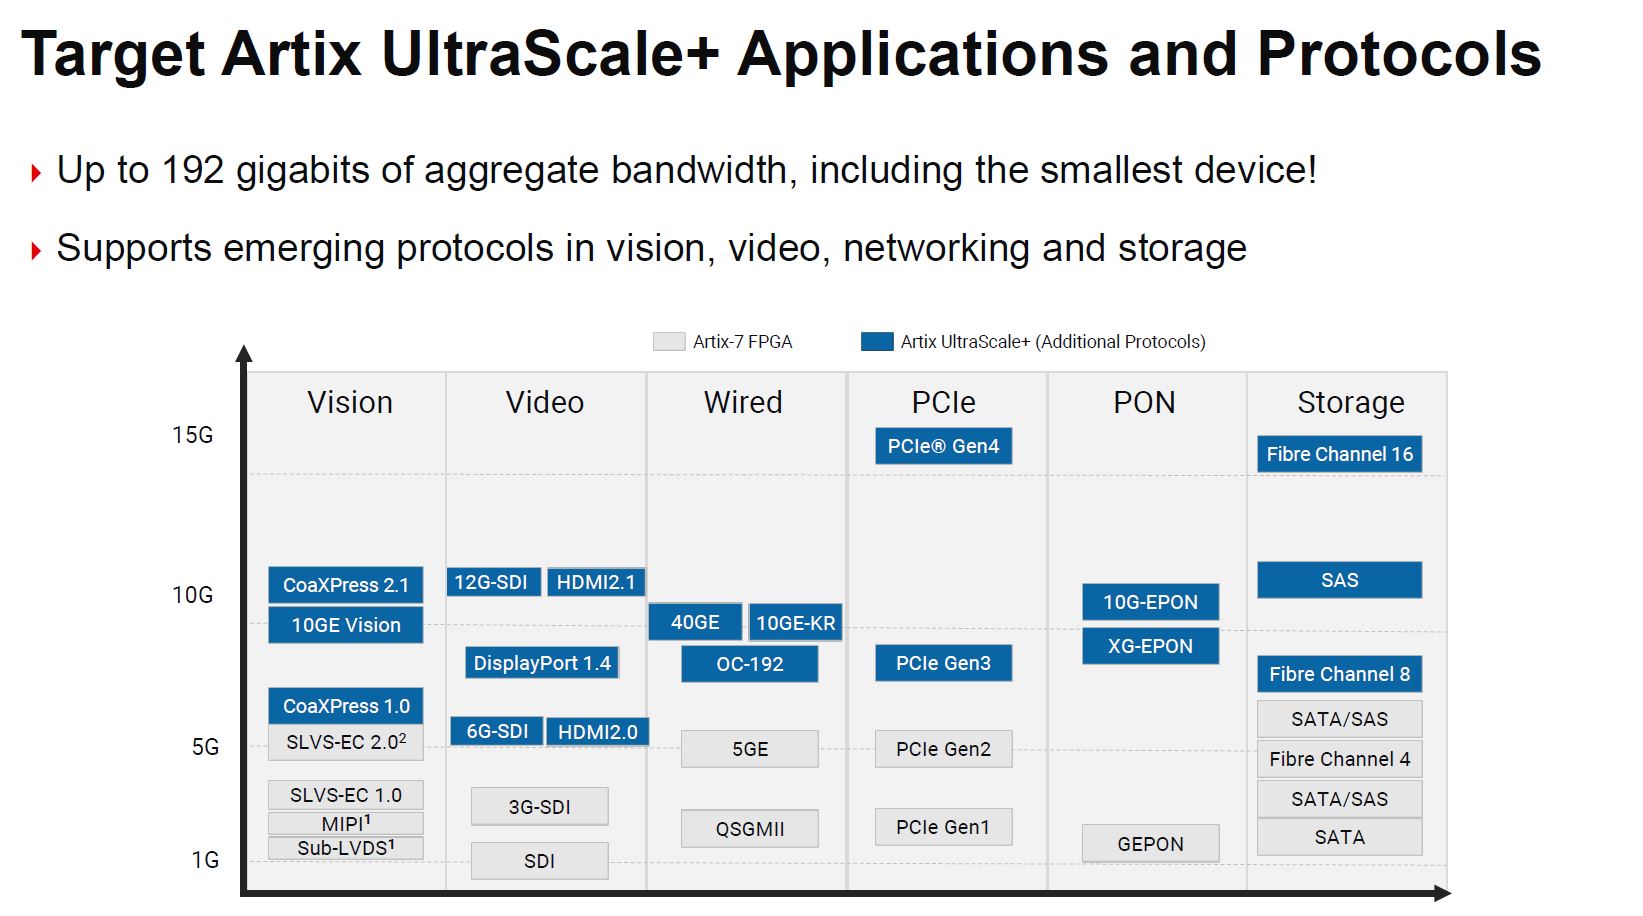 Xilinx Artix UltraScale+ Capabilities